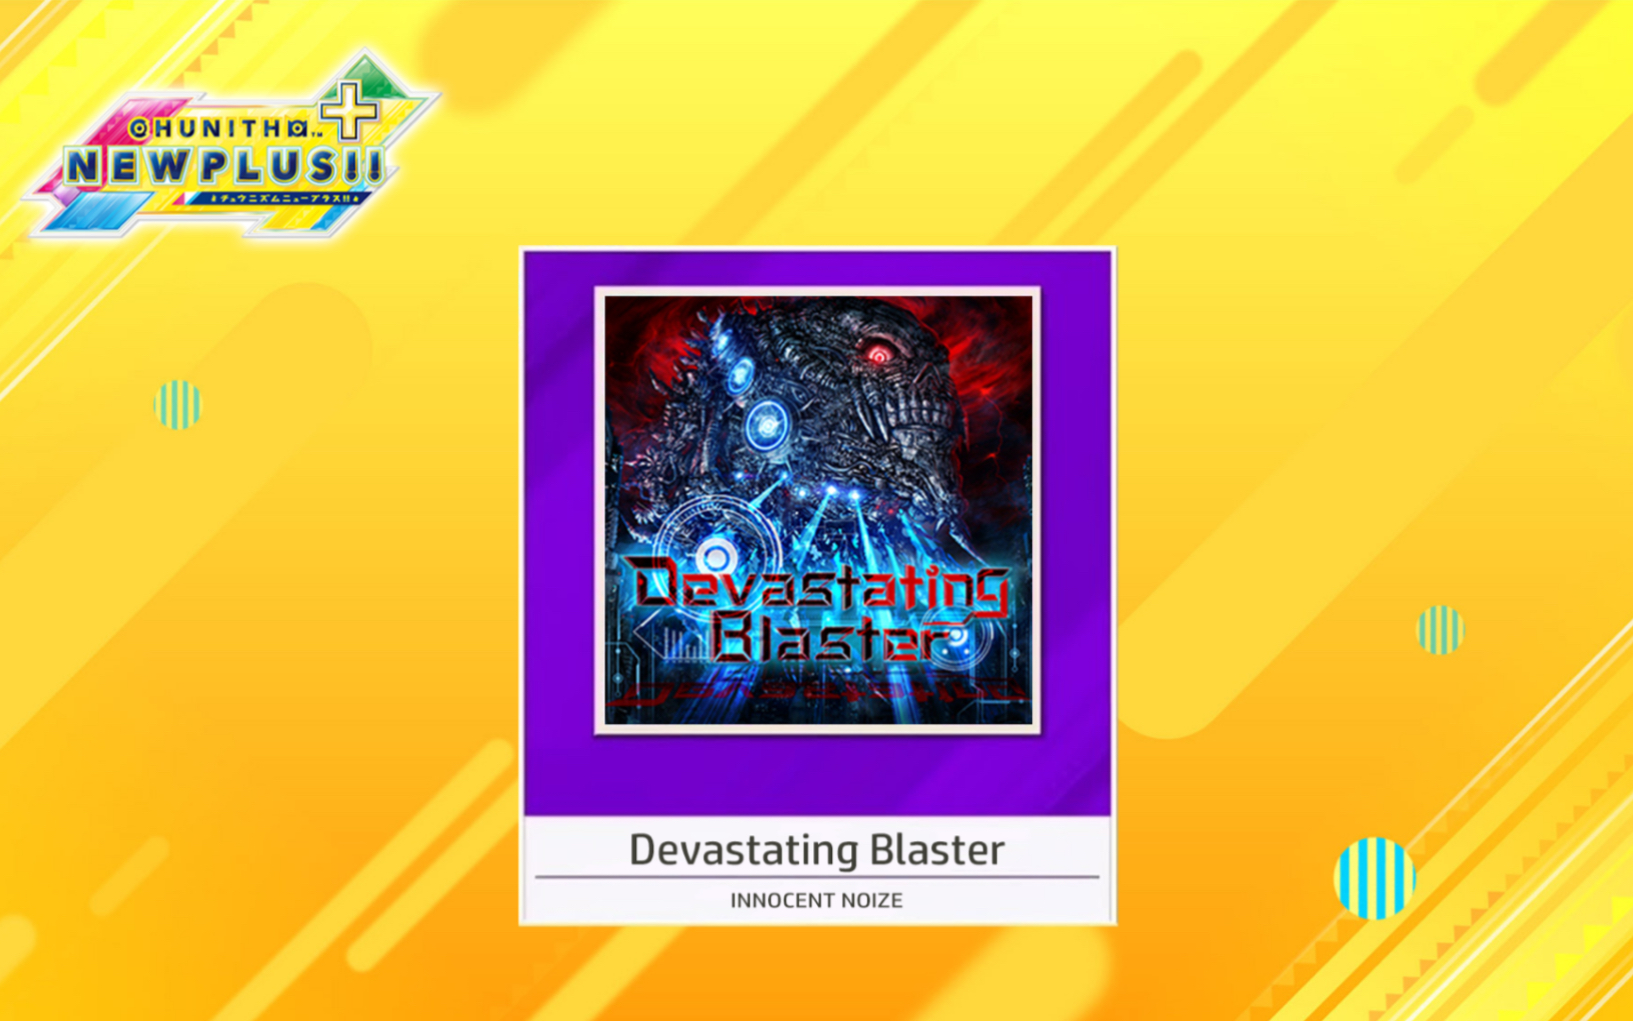 blastermaster图片